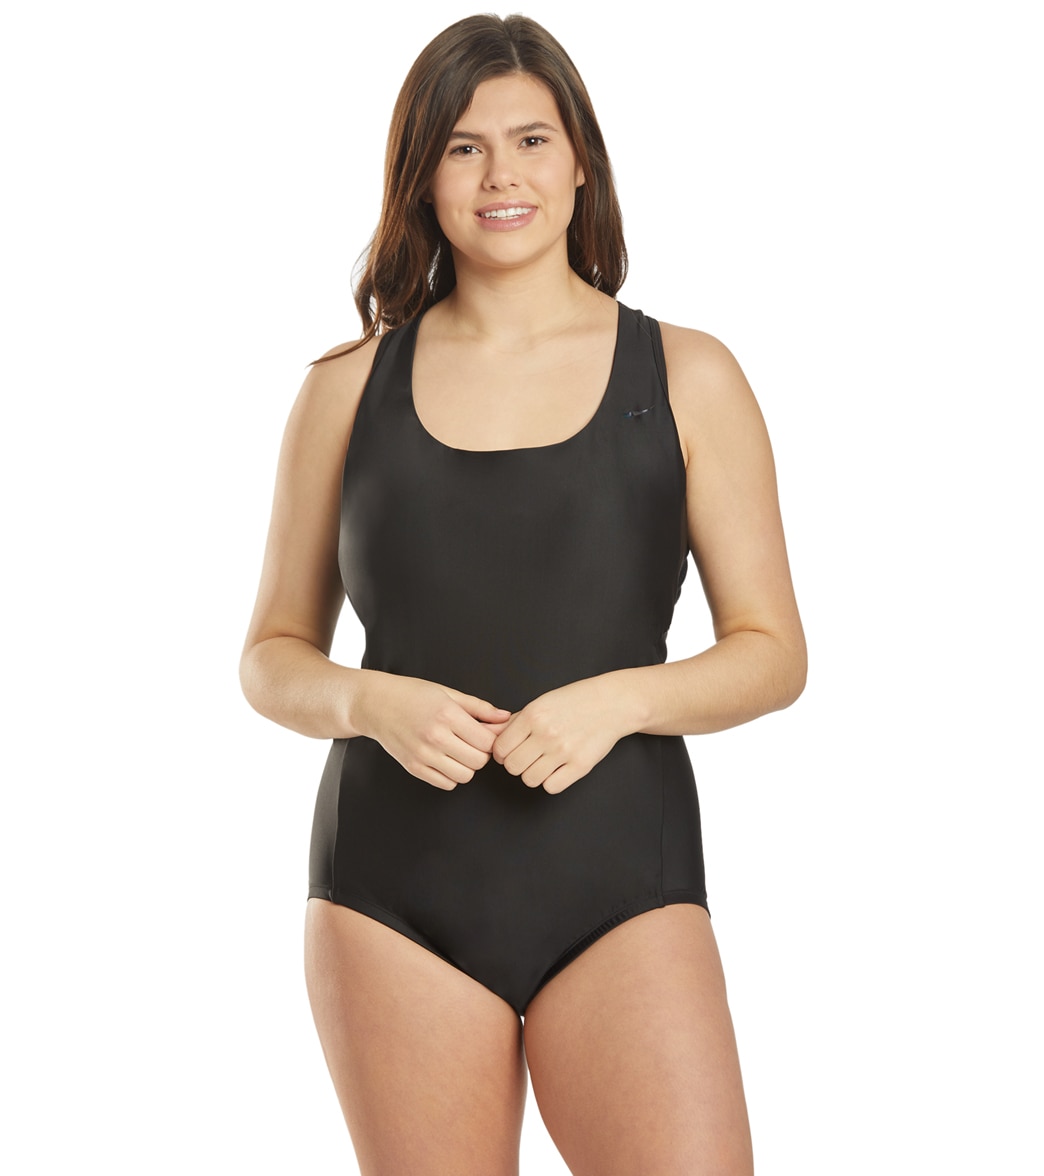 Nike Women's Plus Size Essential Cross Back One Piece Swimsuit - Black 1X - Swimoutlet.com